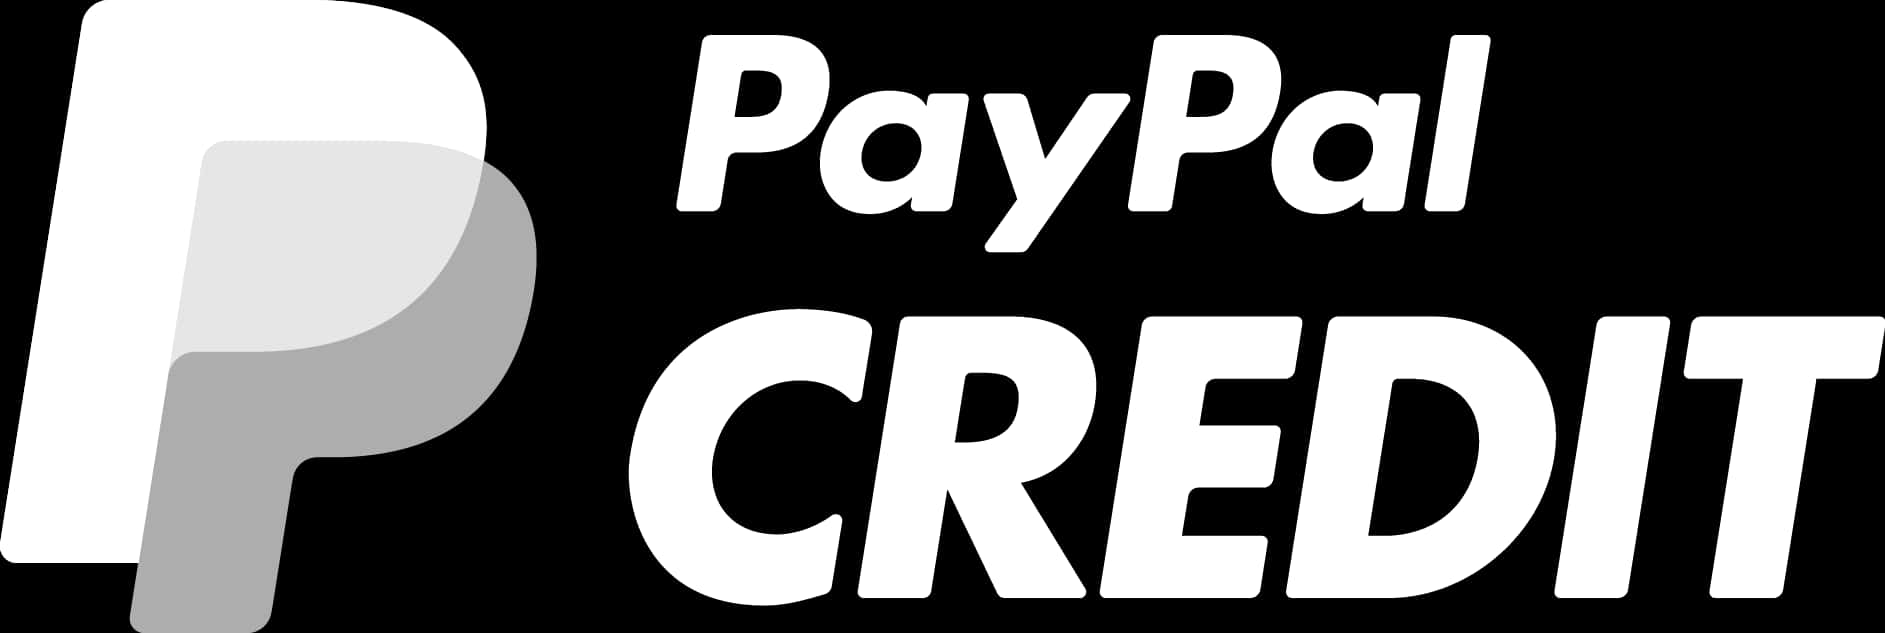 Pay Pal Credit Logo Blackand White